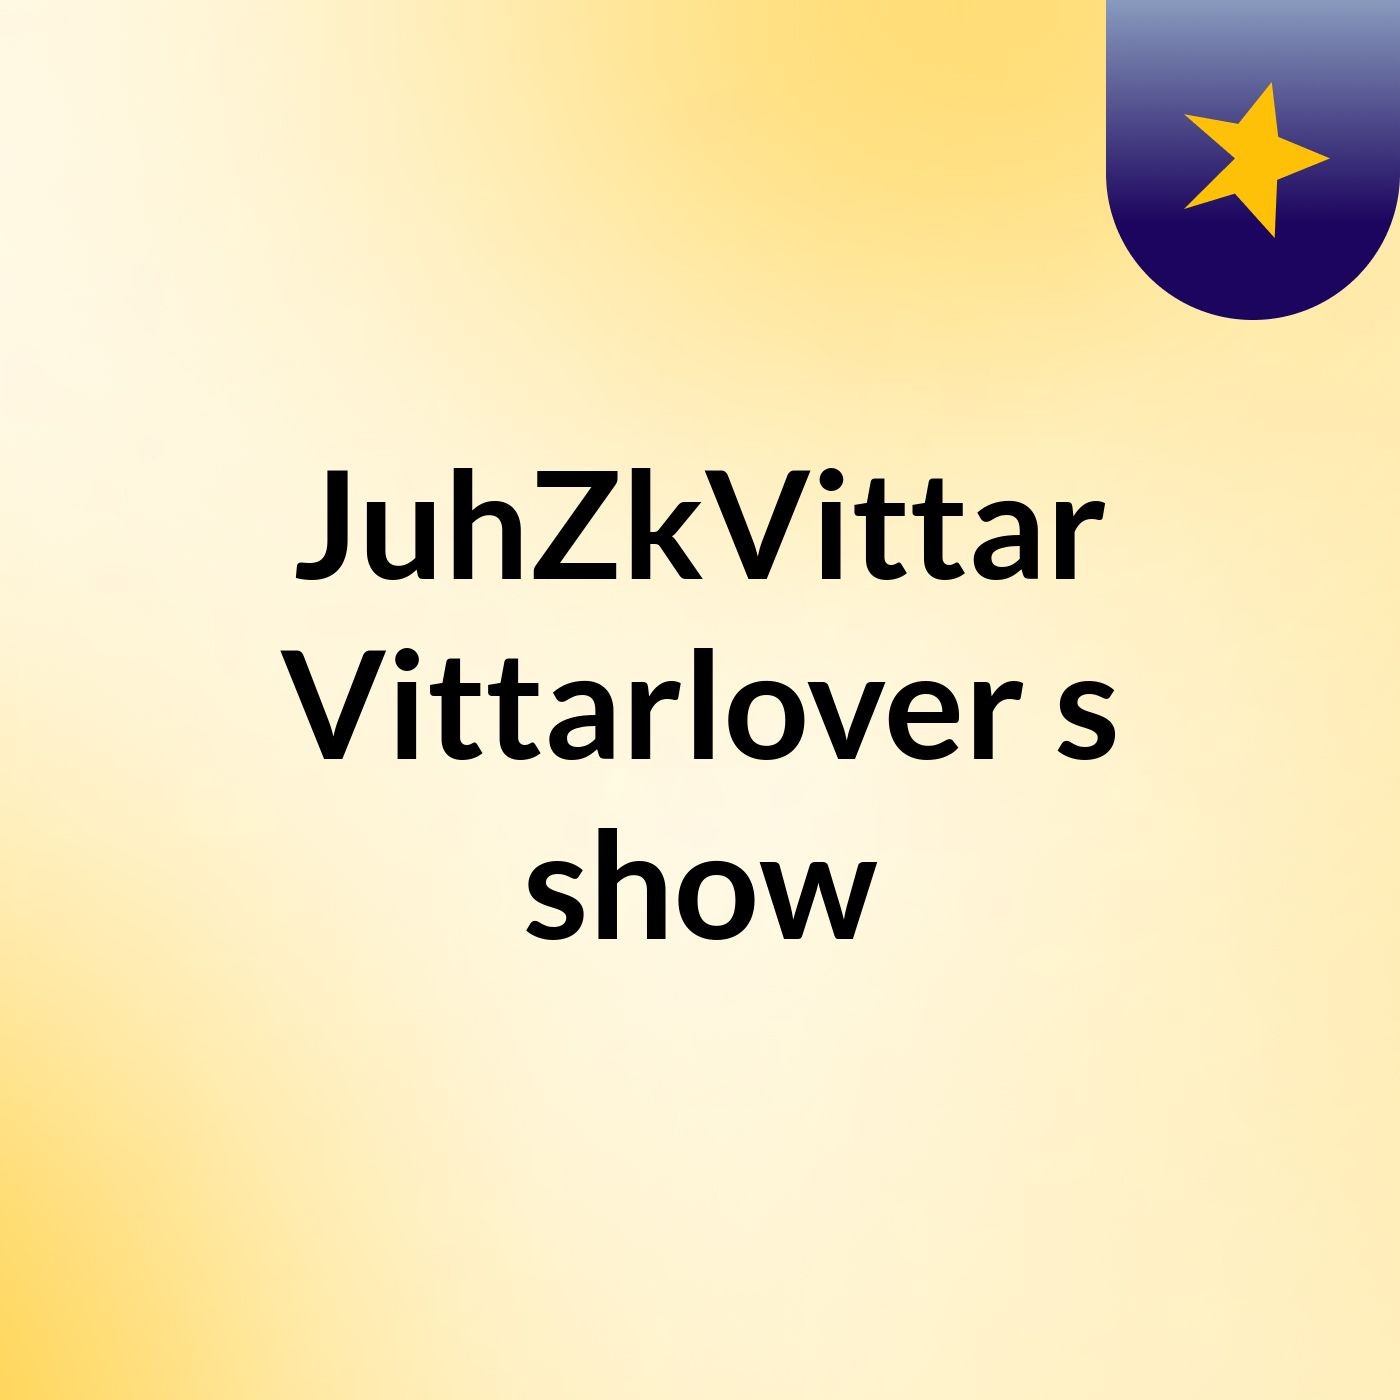 JuhZkVittar Vittarlover's show